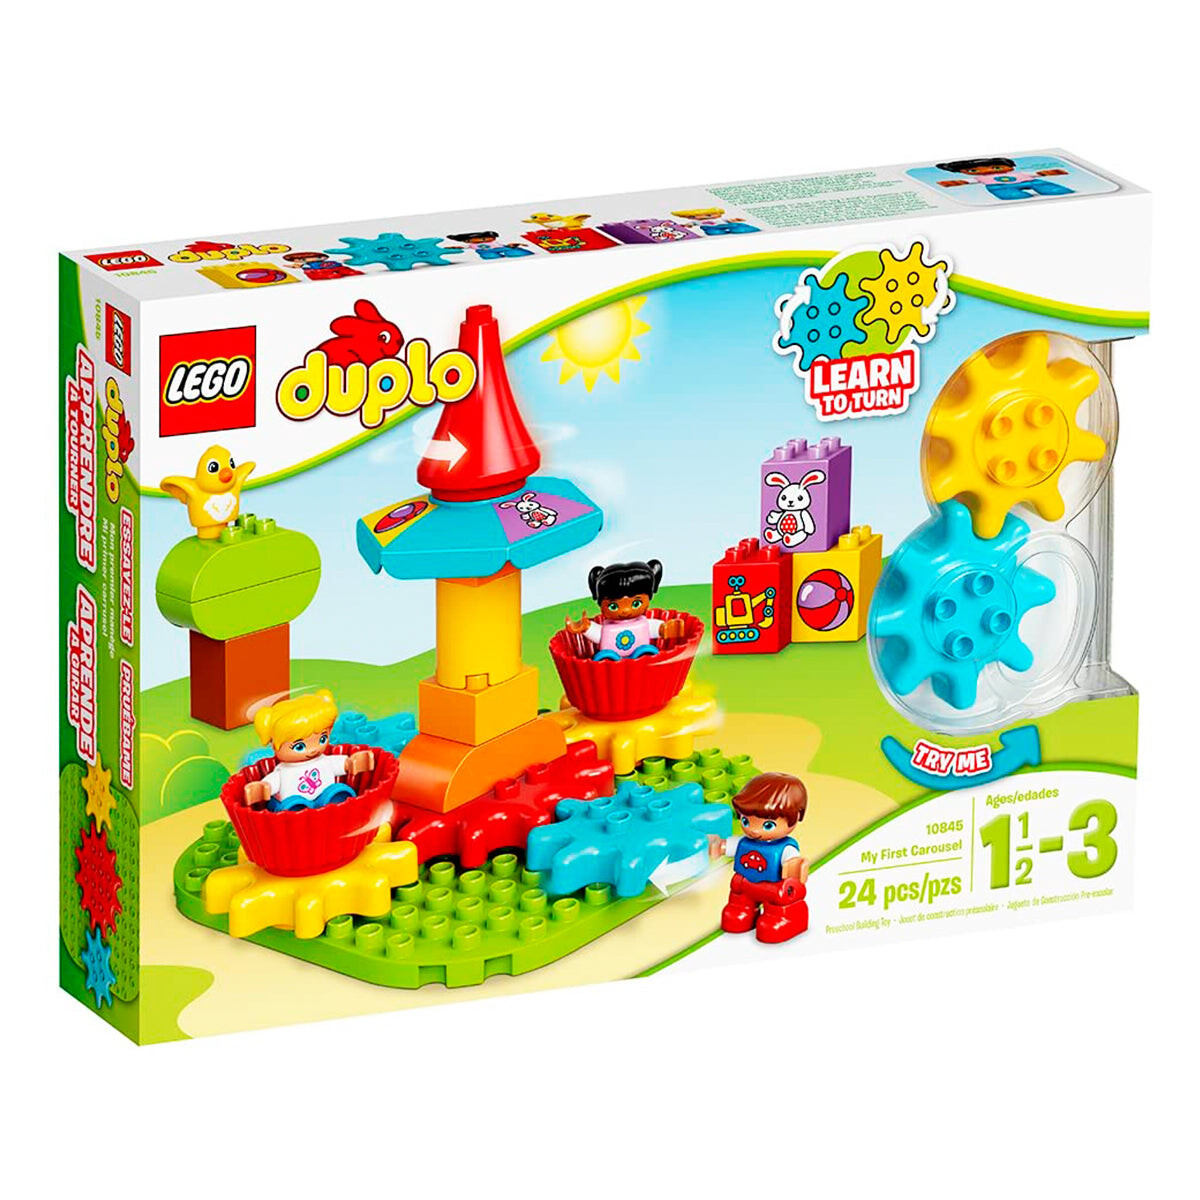 Lego Duplo 10845 Mi Primer Carrusel 24pcs P/ Niños 